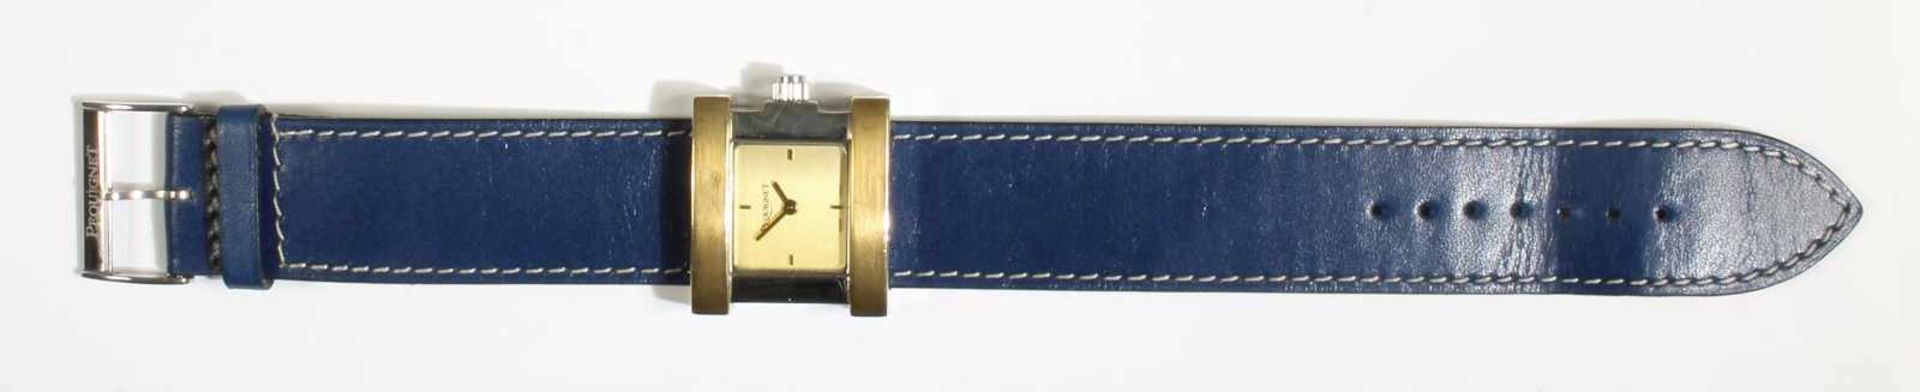 Ausgefallene Damen-Armbanduhr, "PEQUIGNET CAMELEONE" Schweiz, Quarz, Edelstahl/Gold, GG- - Image 2 of 3